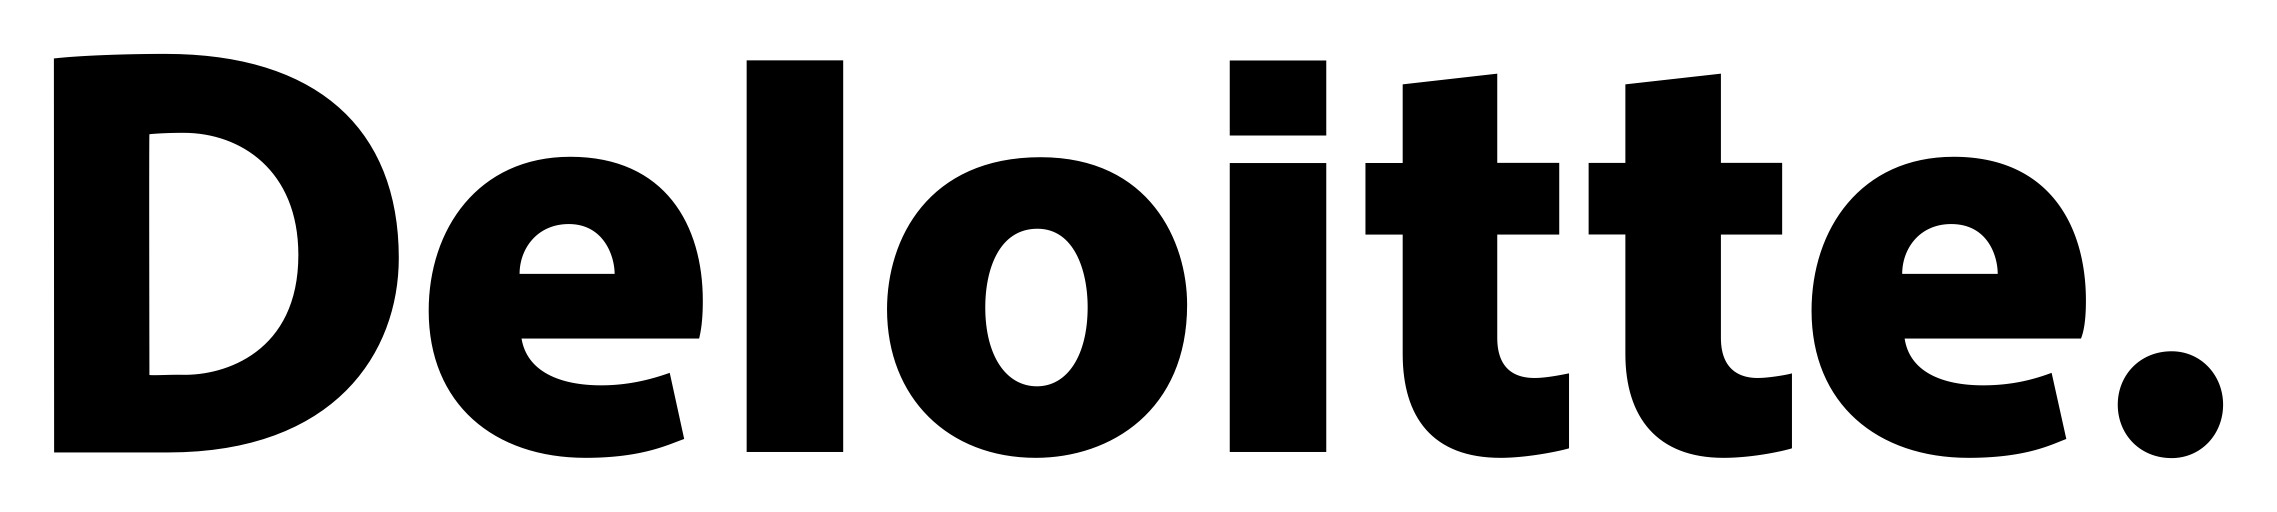 Deloitte Logo icons